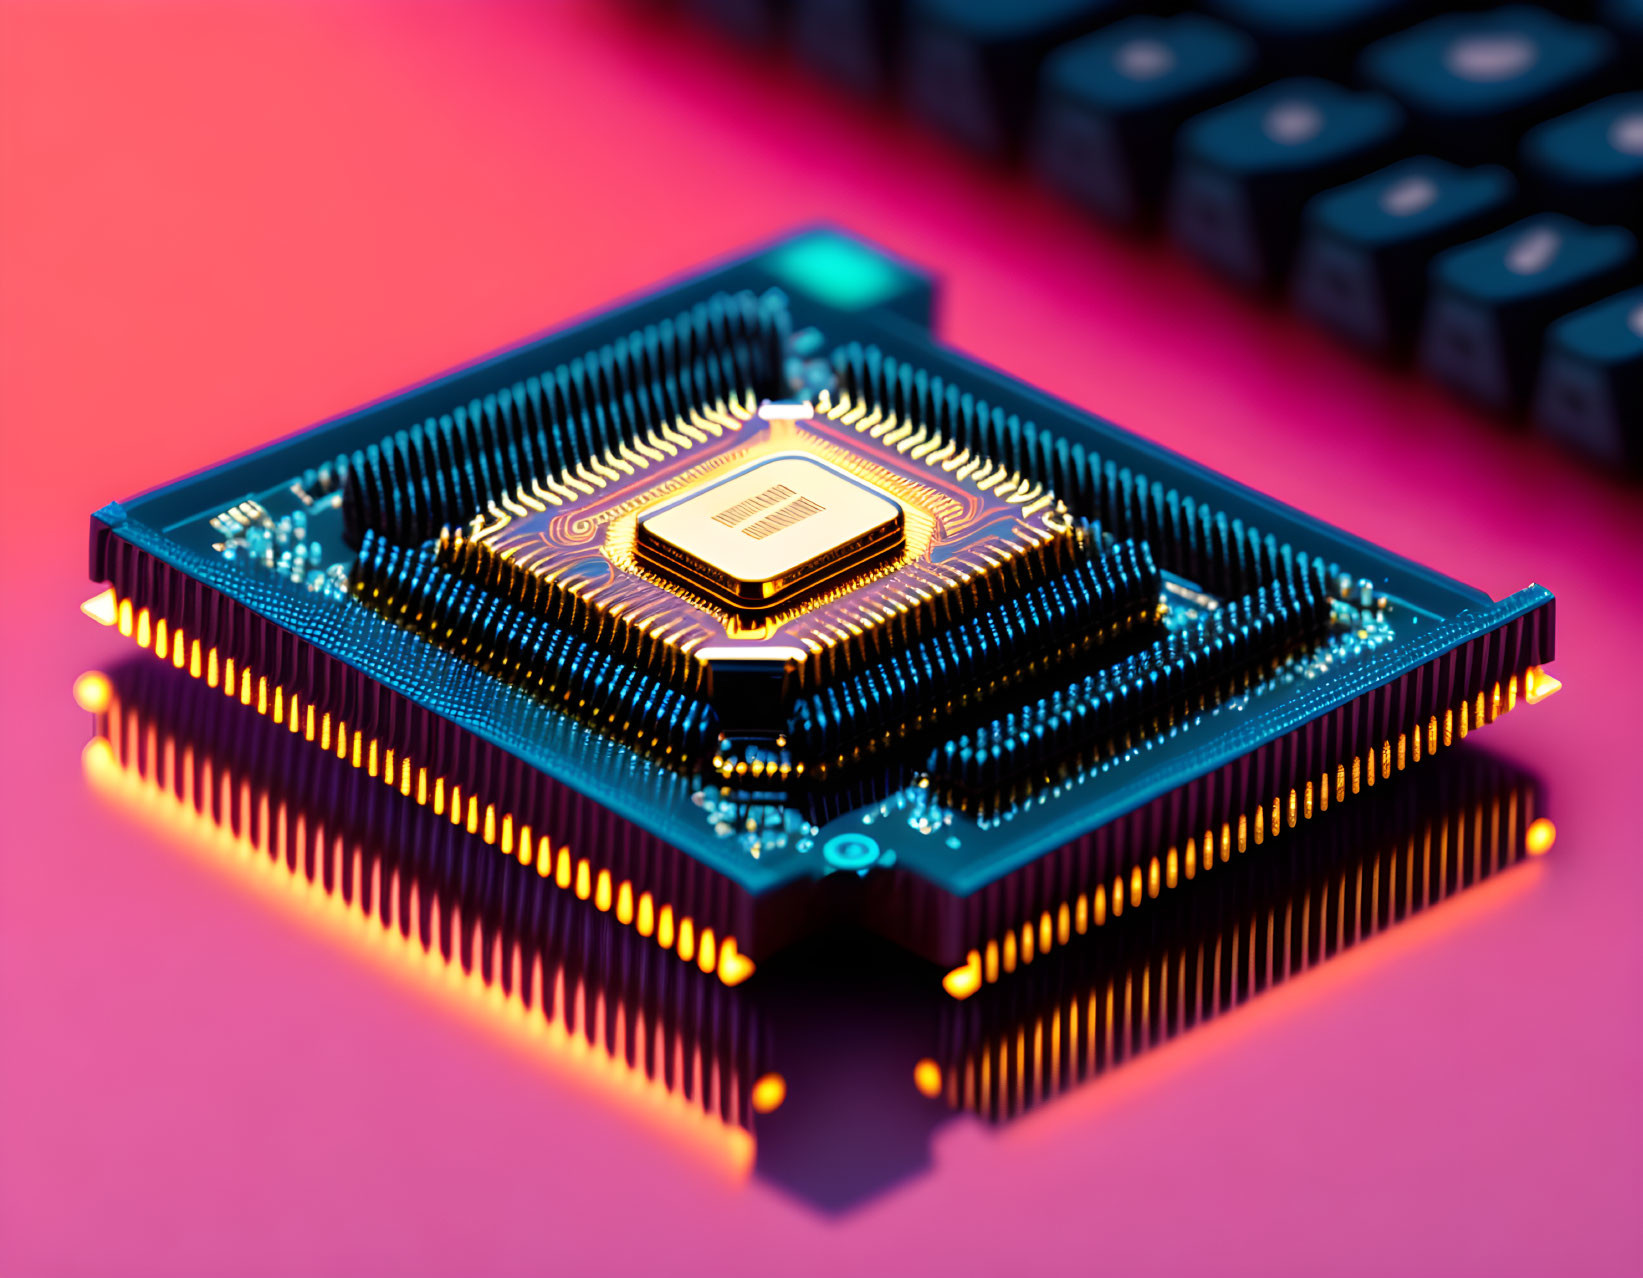 Super Cool Techy Computer Chip